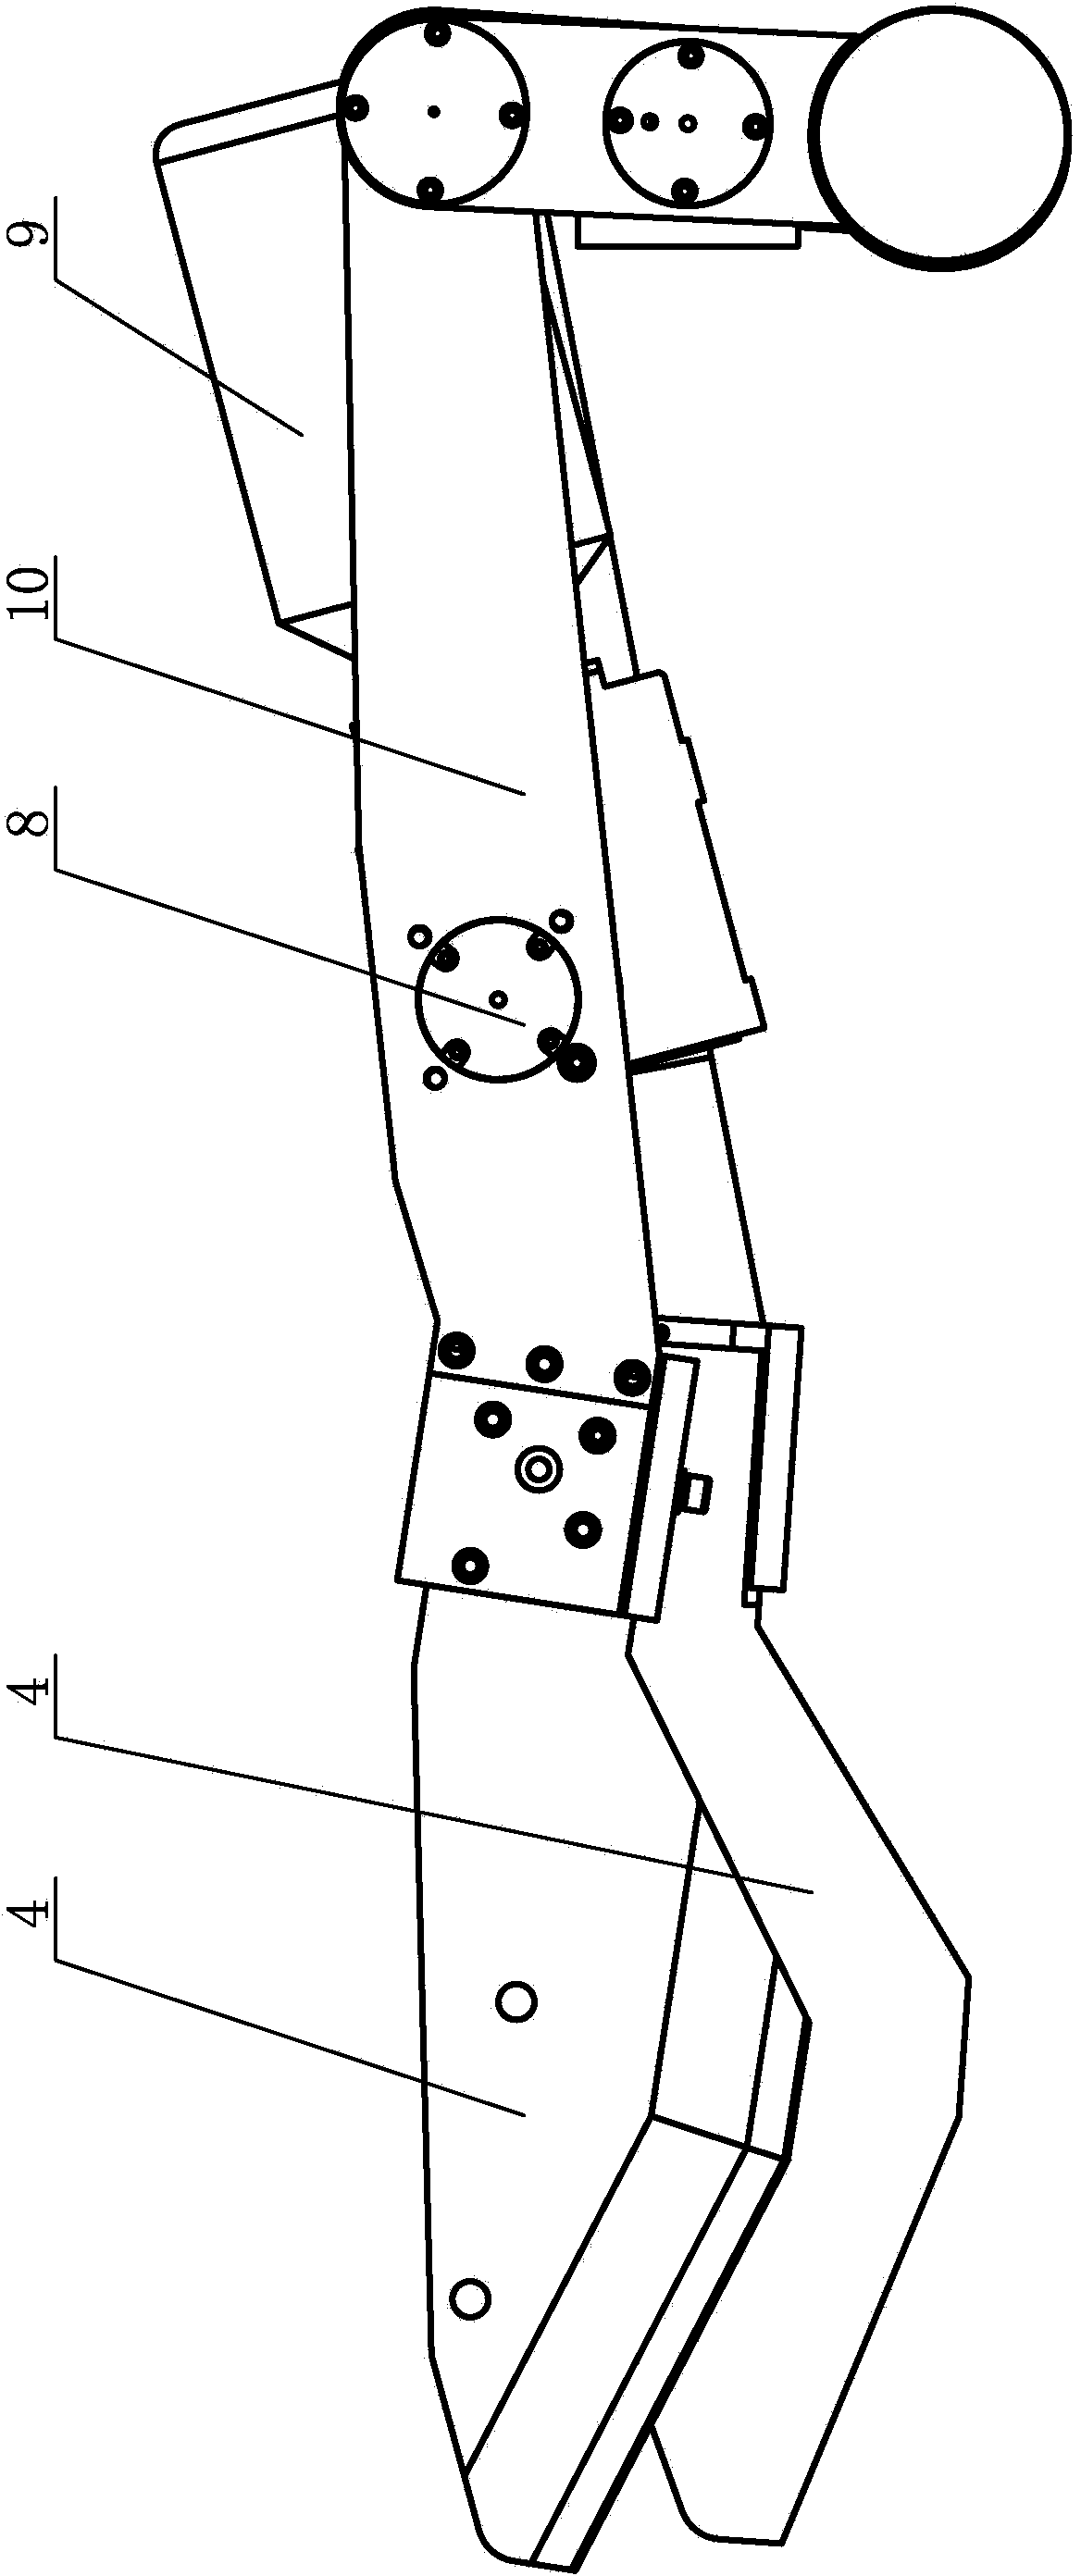 Automatic fifty-fifty splitting robot with single-shaft dual-crank rocking bar mechanism